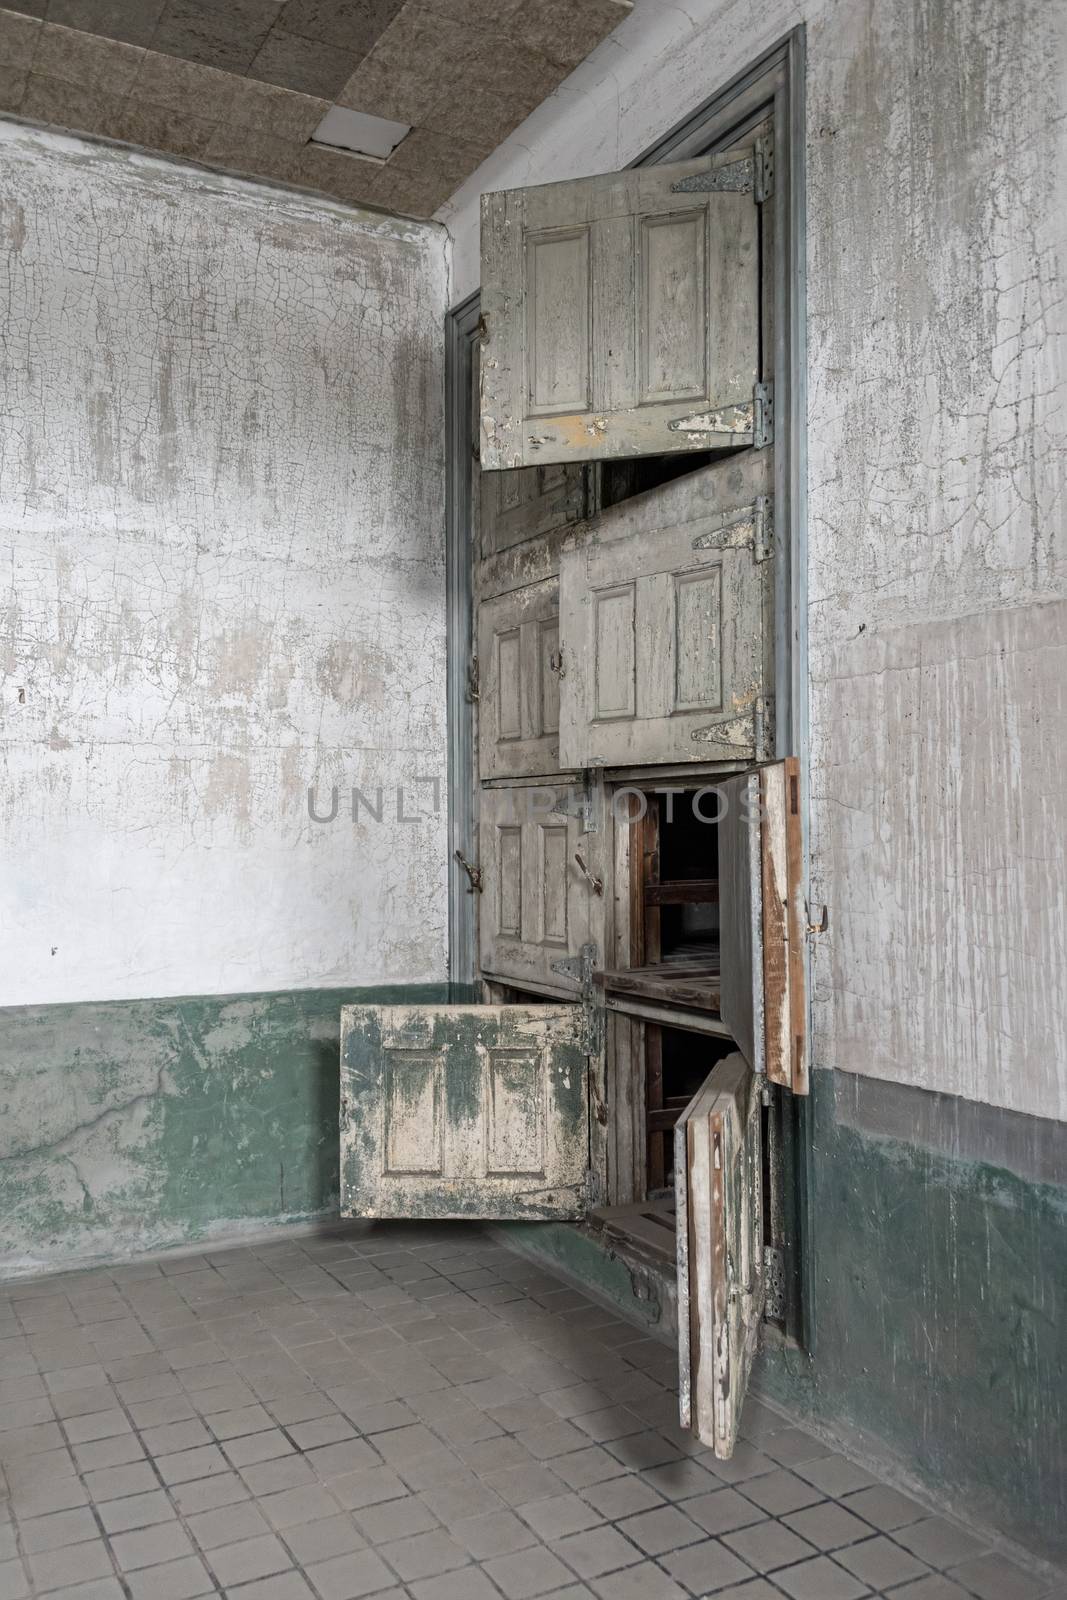 USA, New York, Ellis Island - May 2019: The Morgue in the hospital at Ellis Island